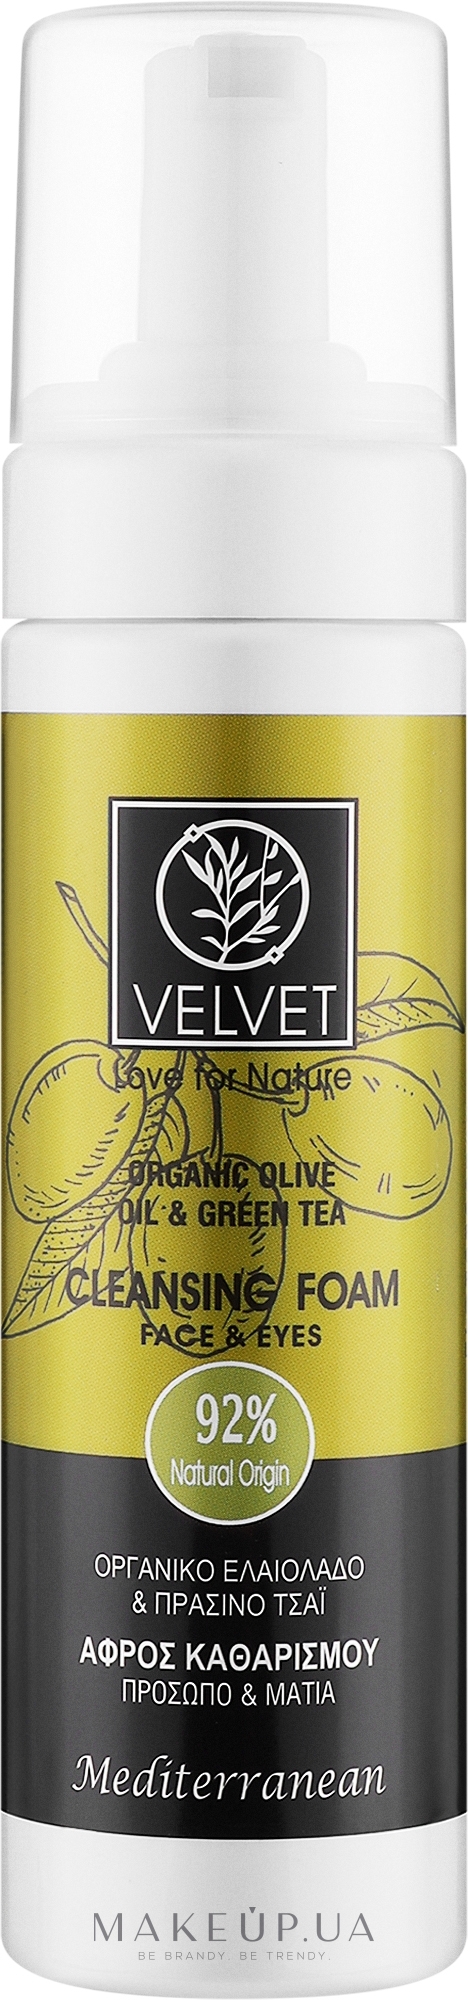 Очищаюча пінка для обличчя та очей - Velvet Love for Nature Organic Olive & Green Tea Foam — фото 200ml